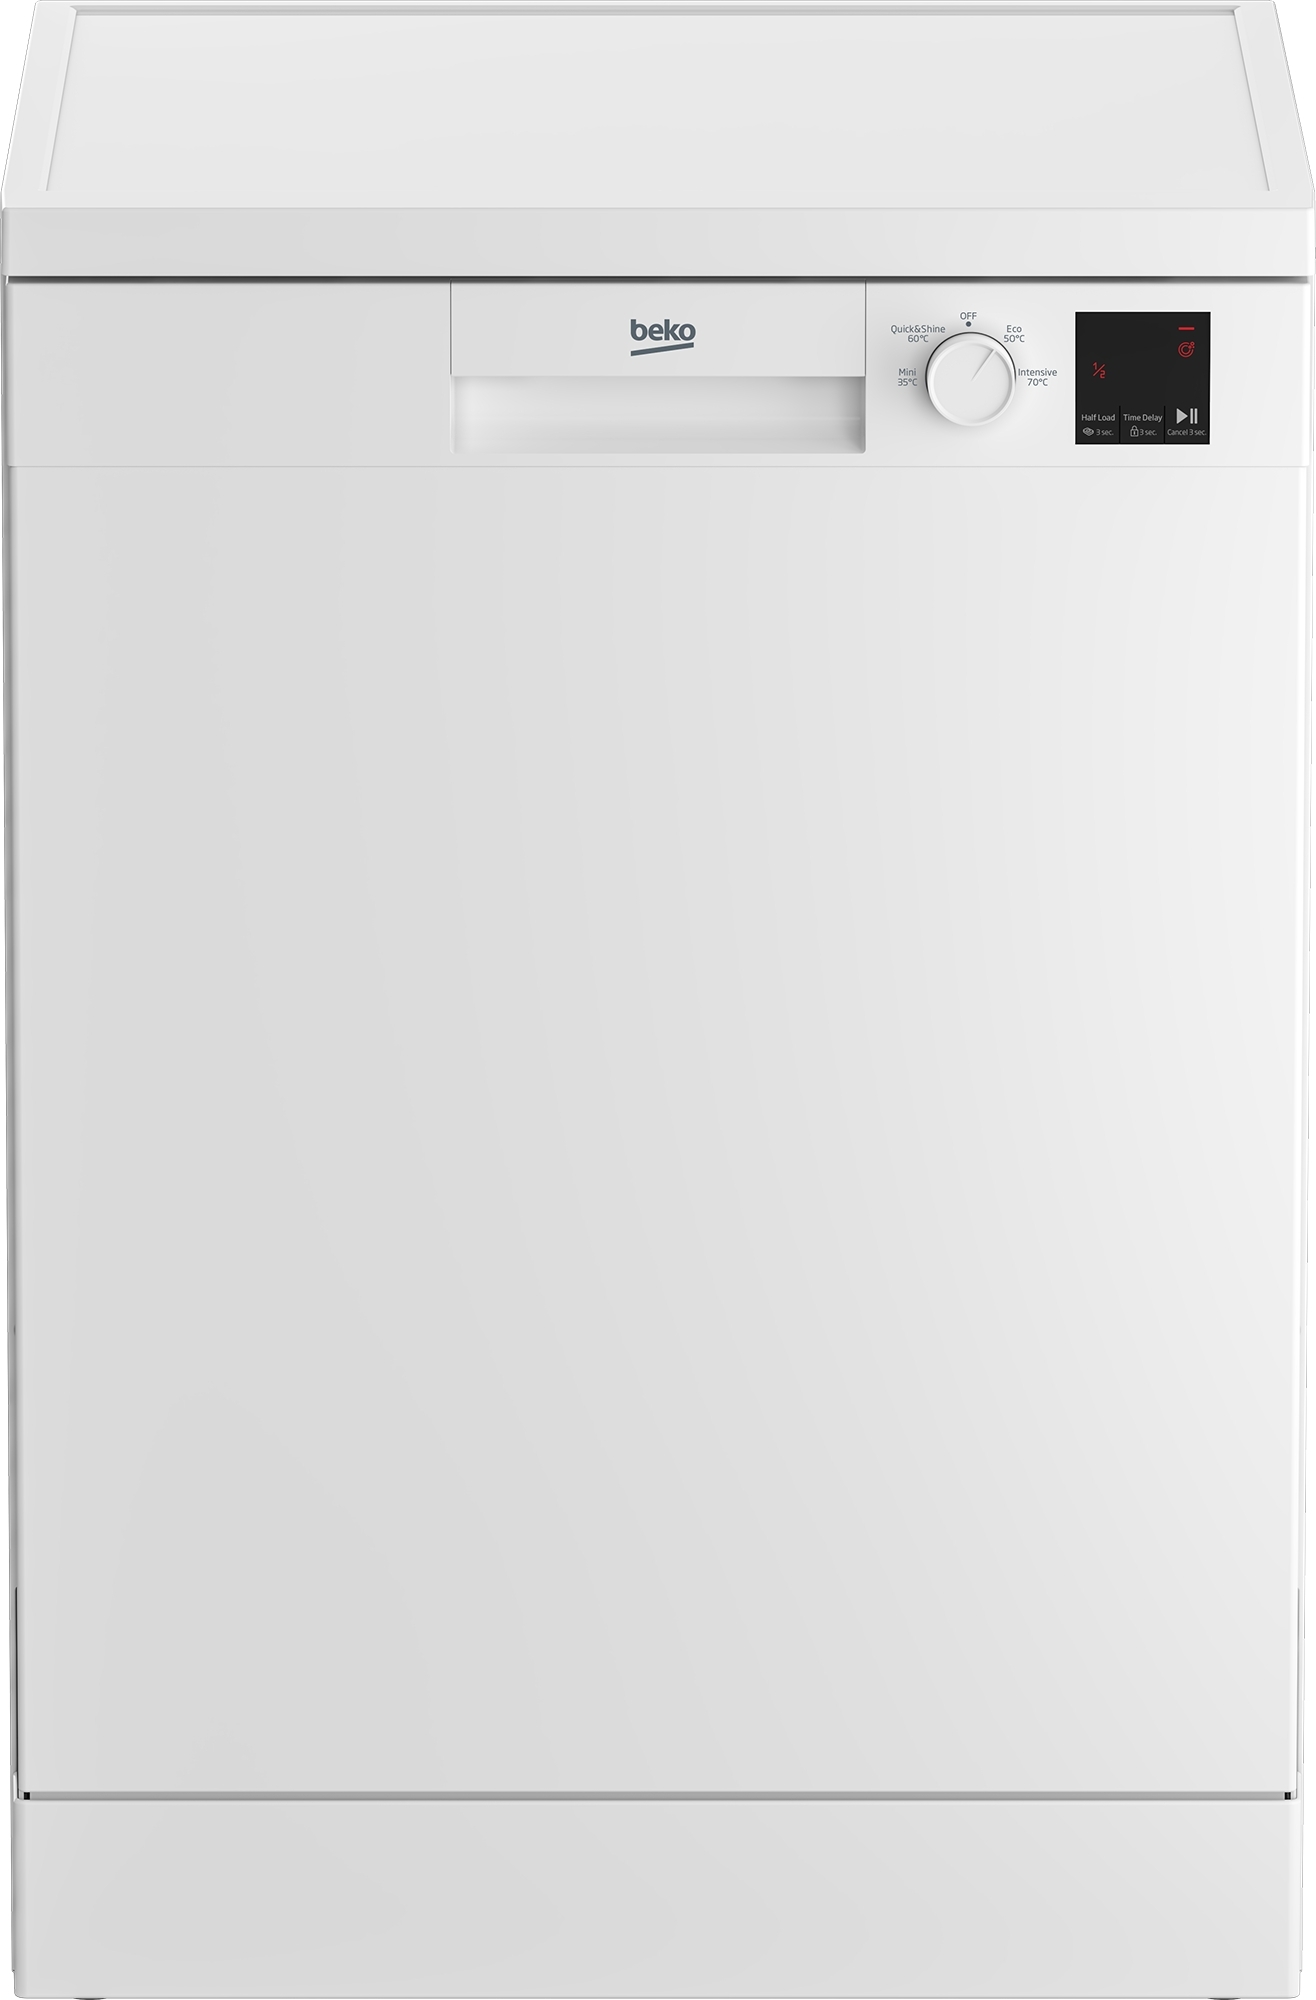 Beko DVN04320W 60cm Freestanding Dishwasher - White | Donaghy Bros.